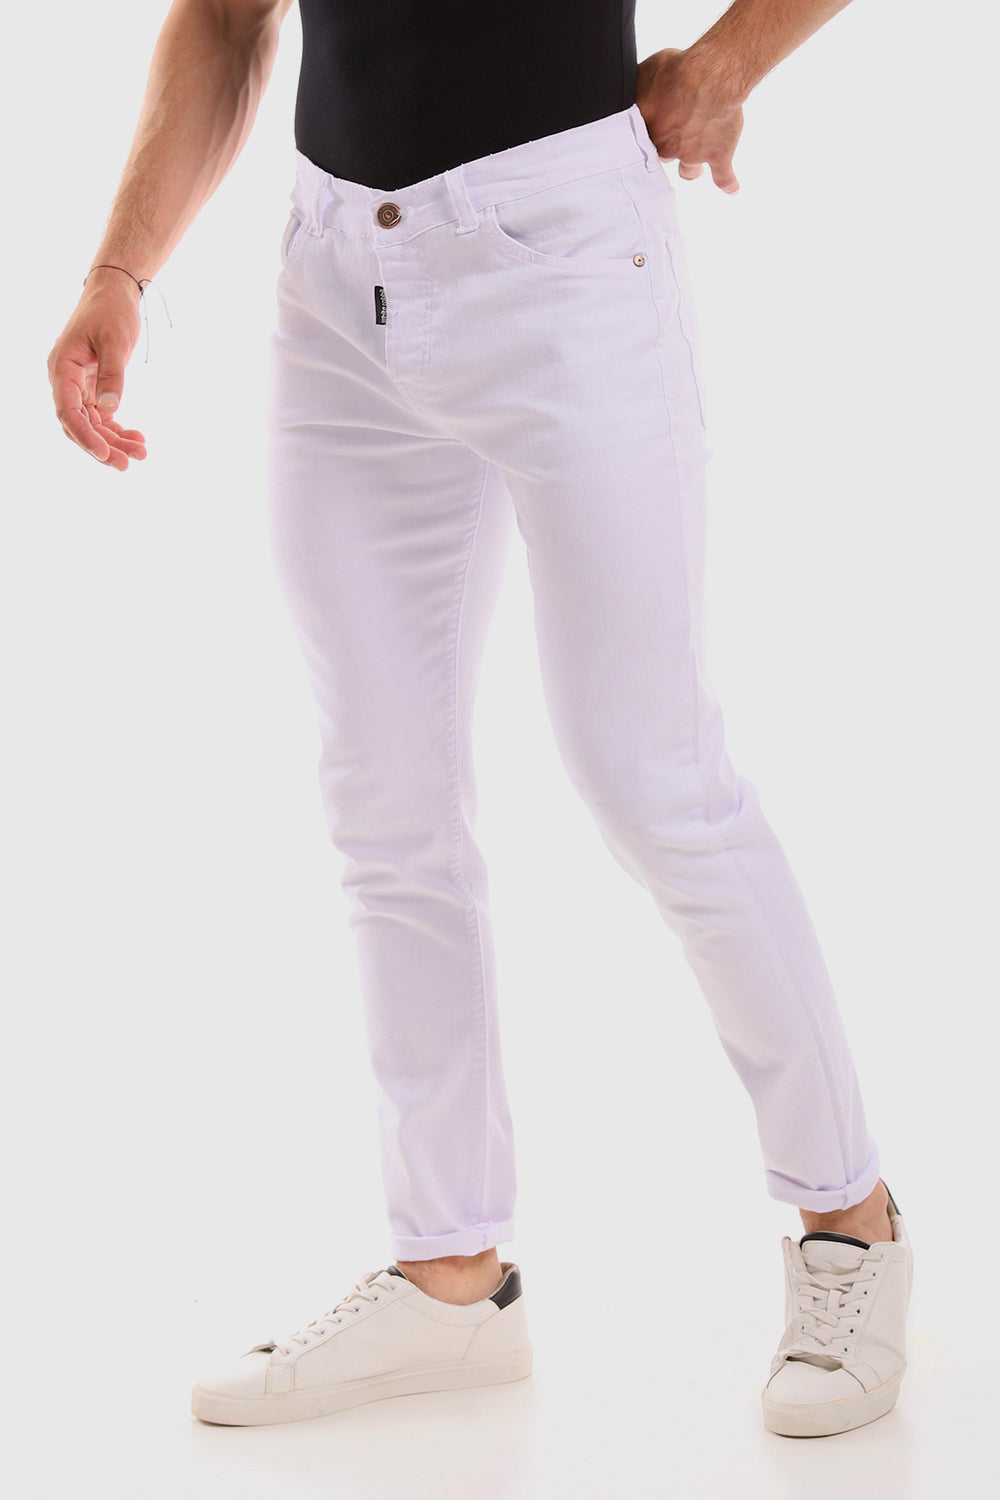 White  Pockets Plain Slim Fit Black Jeans Pants